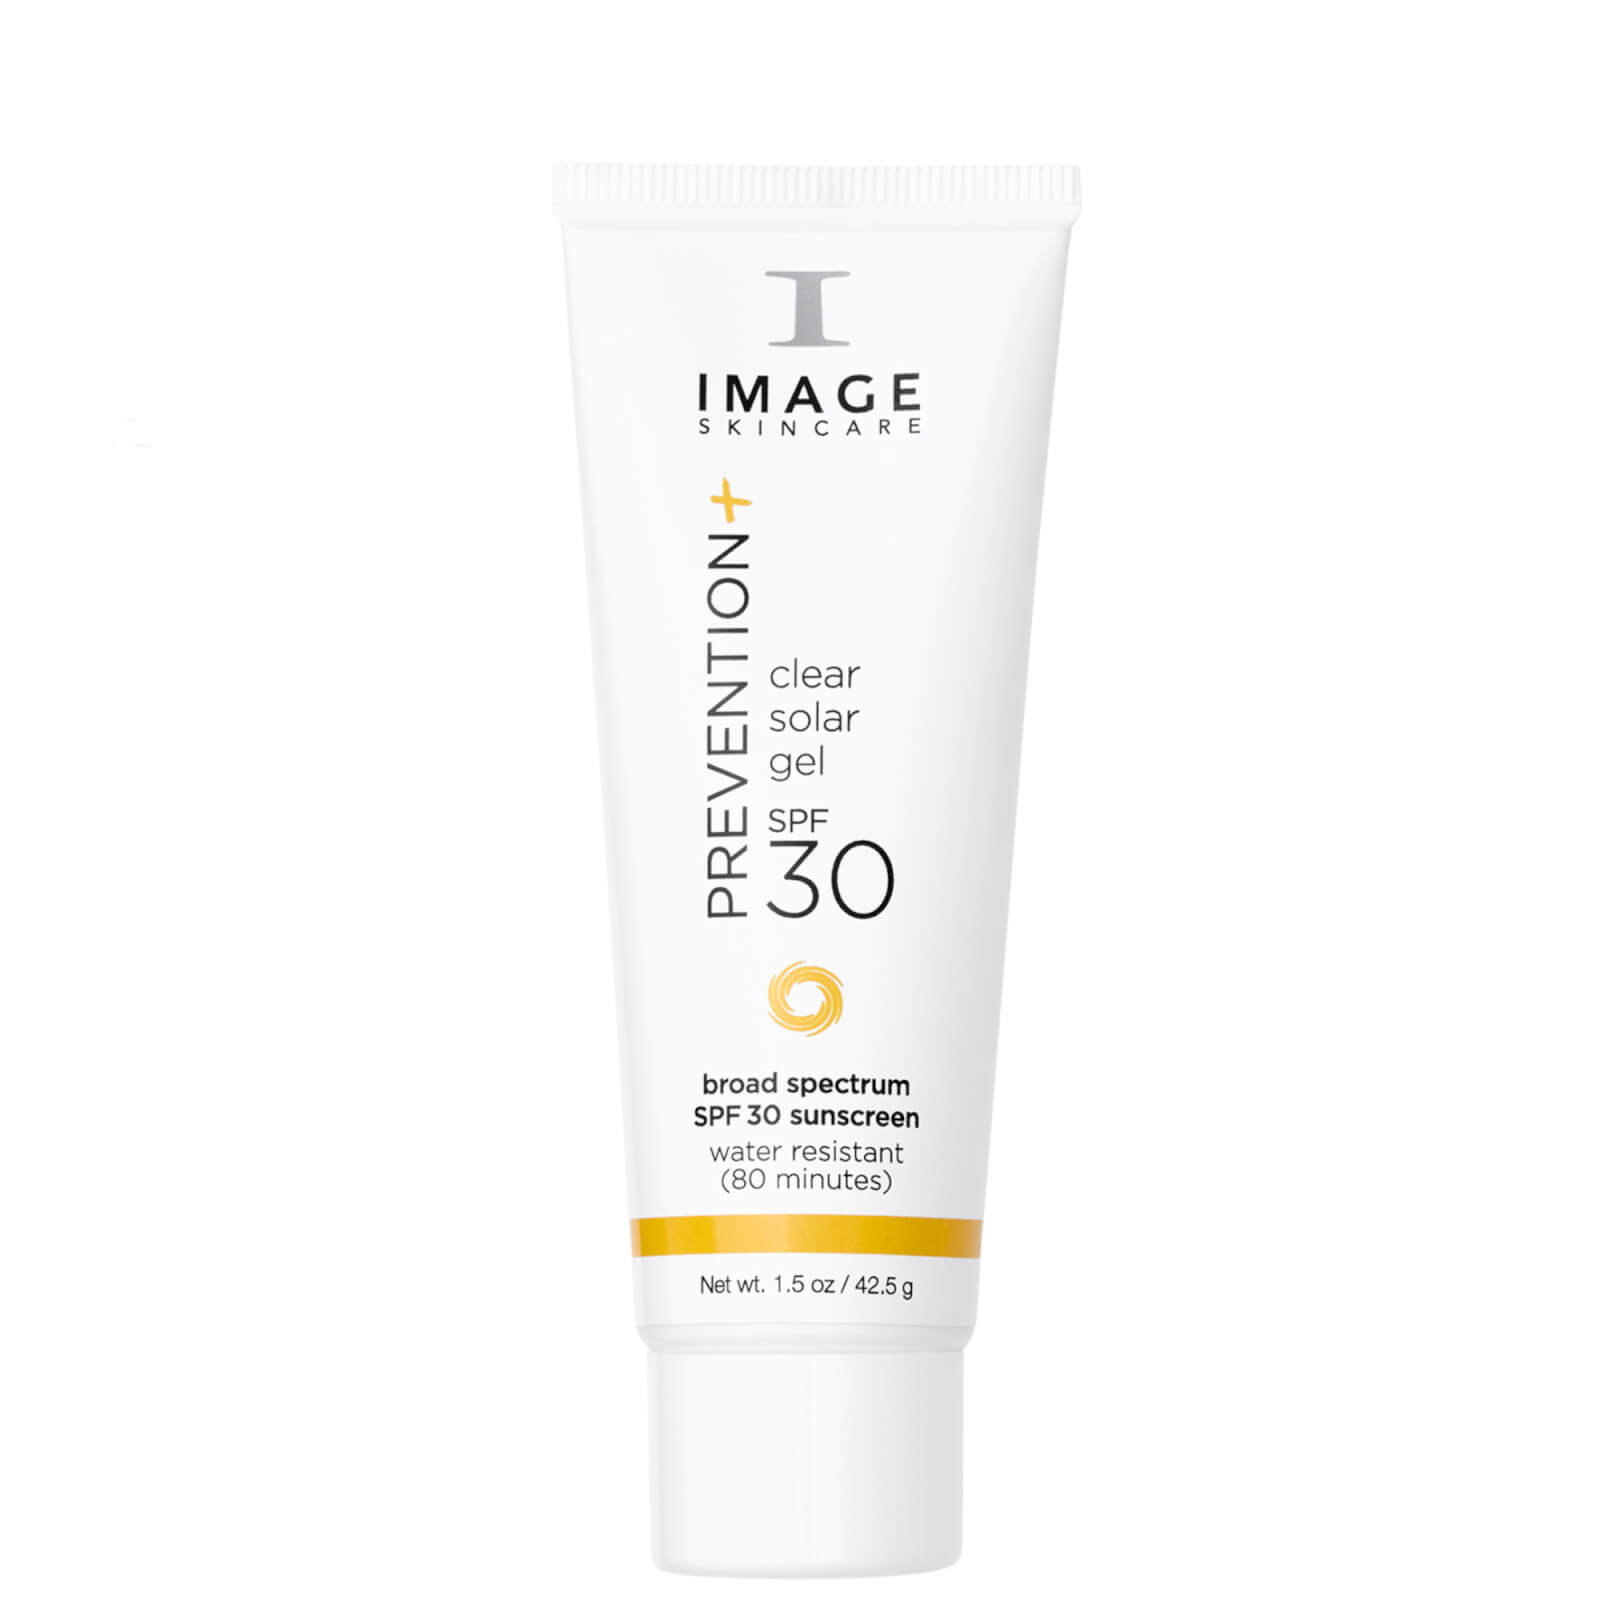 Image Skincare Spf 30 Prevention+ Clear Solar Gel 1.5g In White